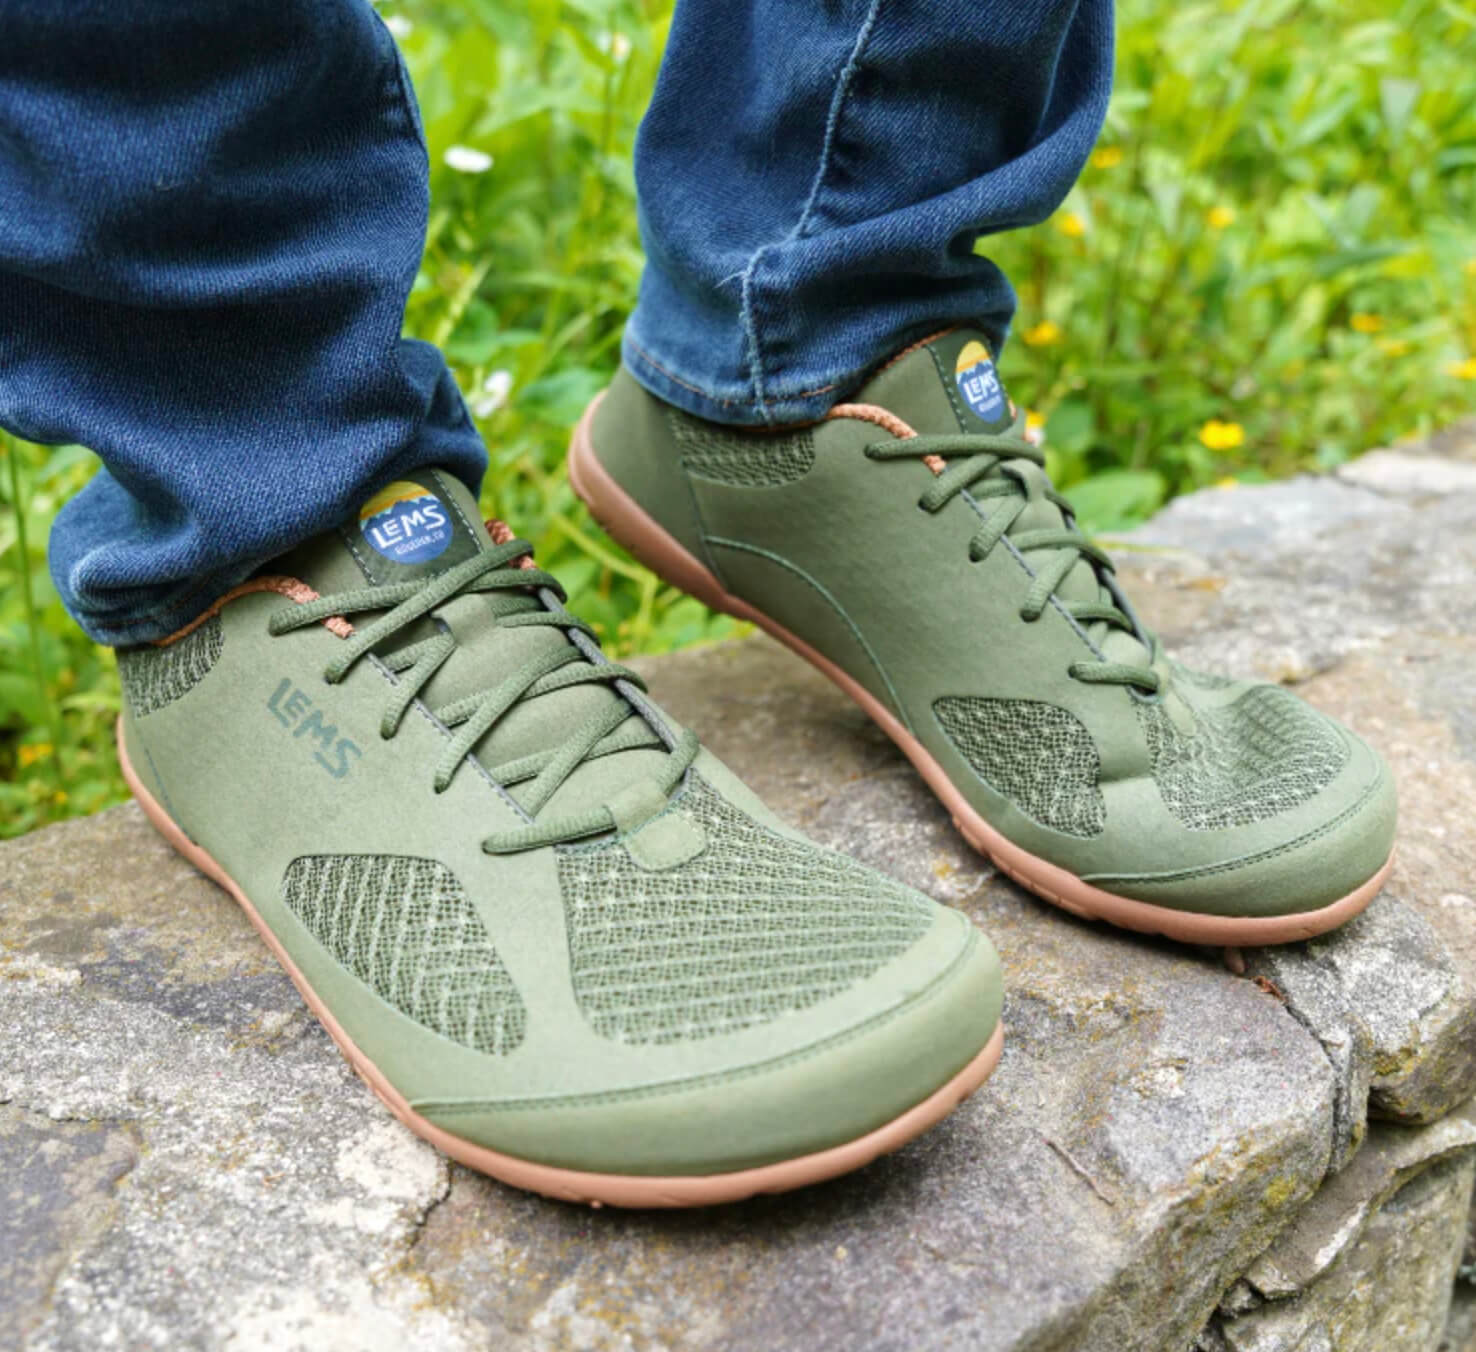 Men's Chillum | Minimalist boots, Minimalist shoes, Barefoot boots